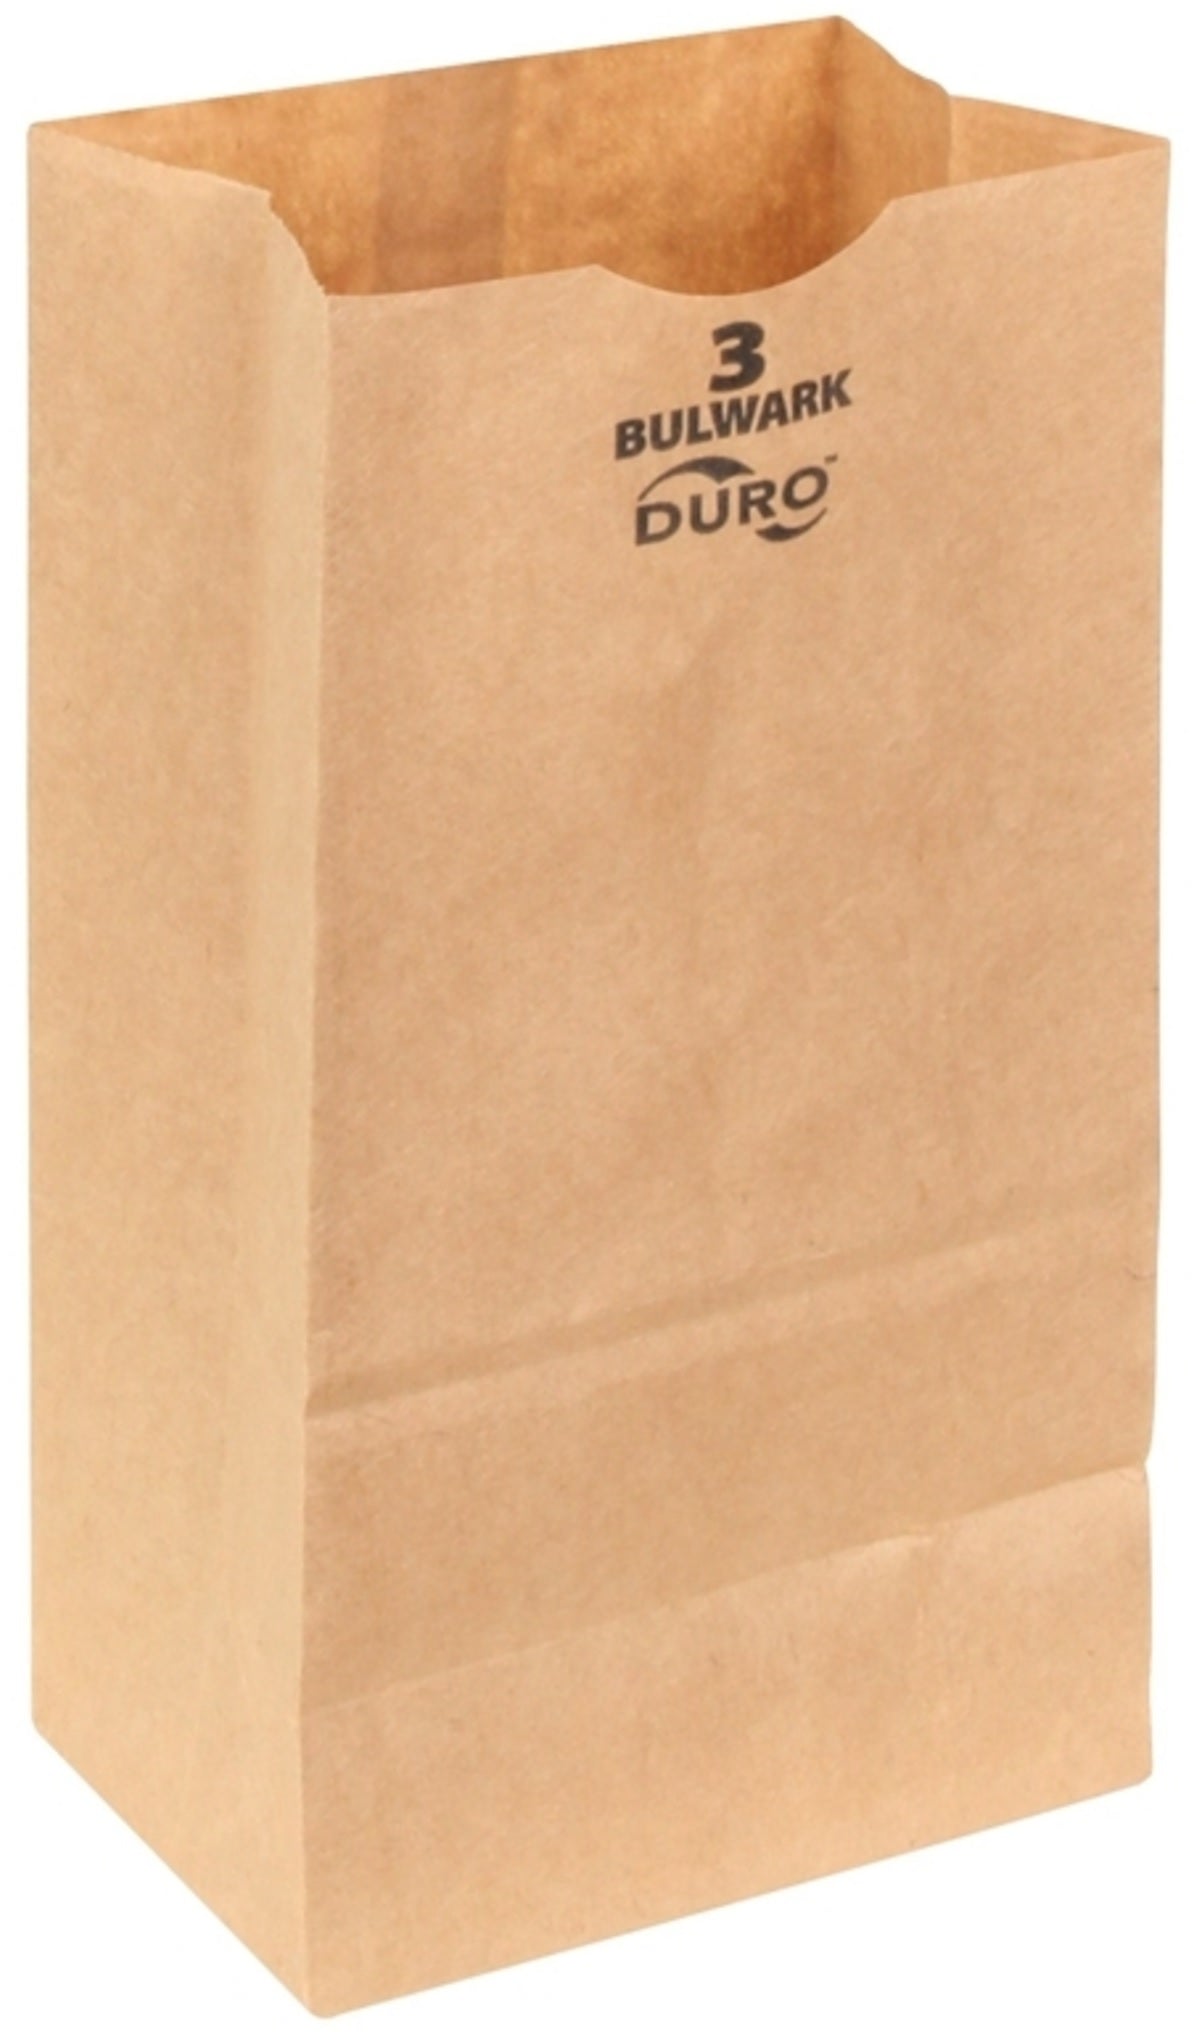 Duro 71003 Bulwark Grocery Bag, 3 Lbs